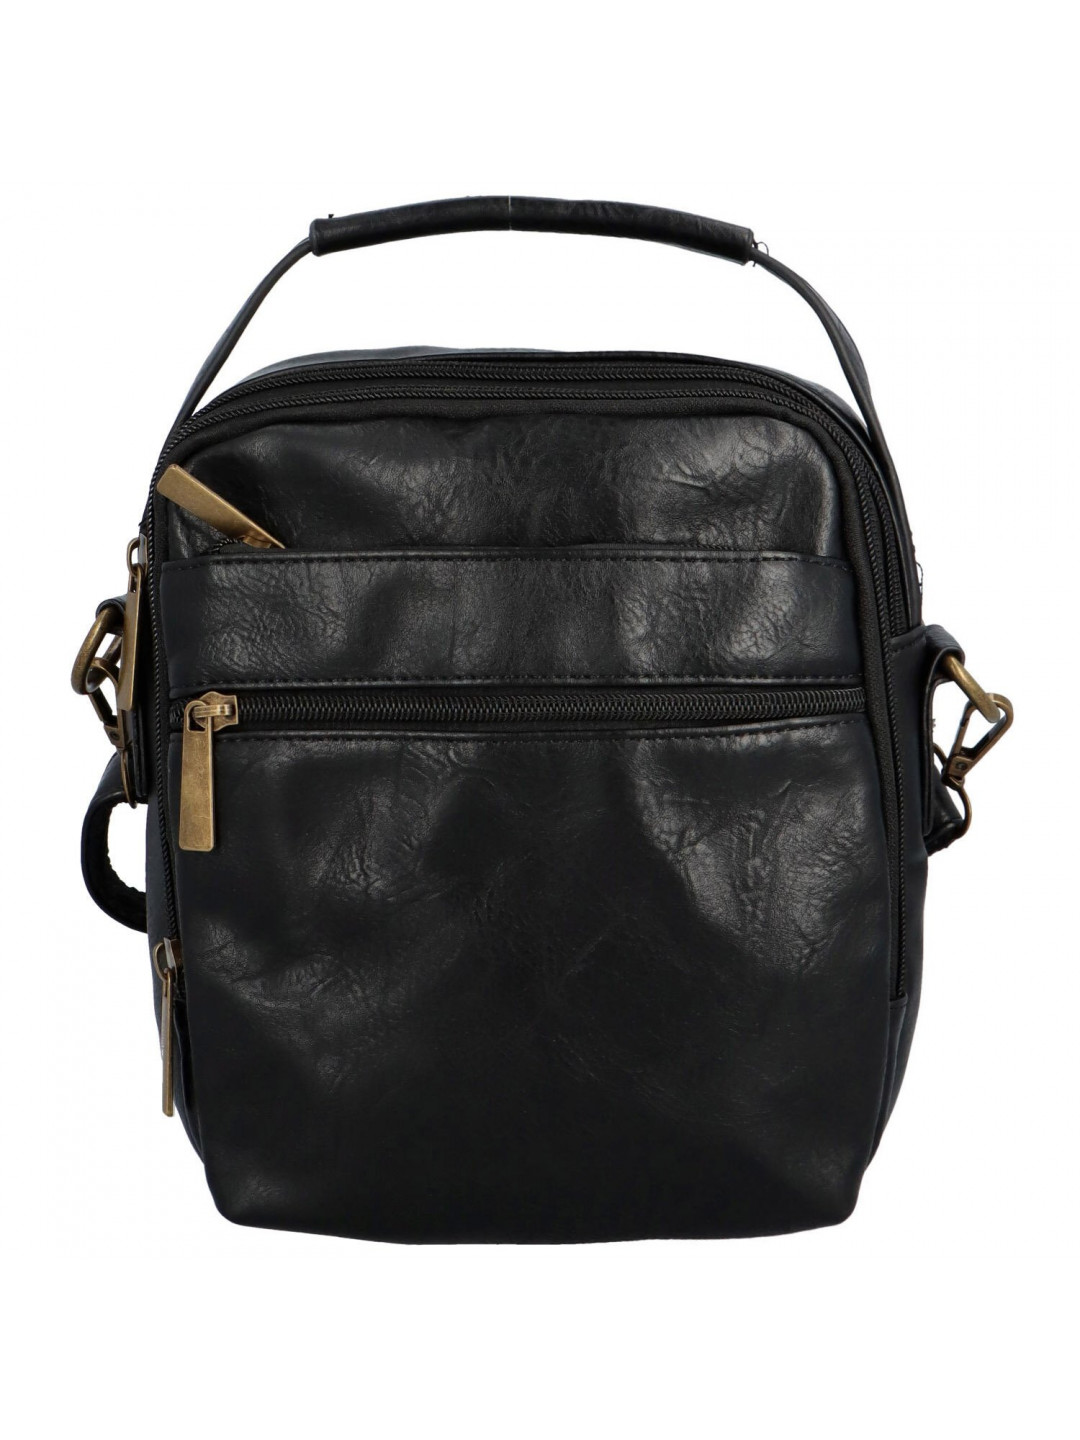 Trendy pánská crossbody taška s uchem černá – Paolo bags Marlin